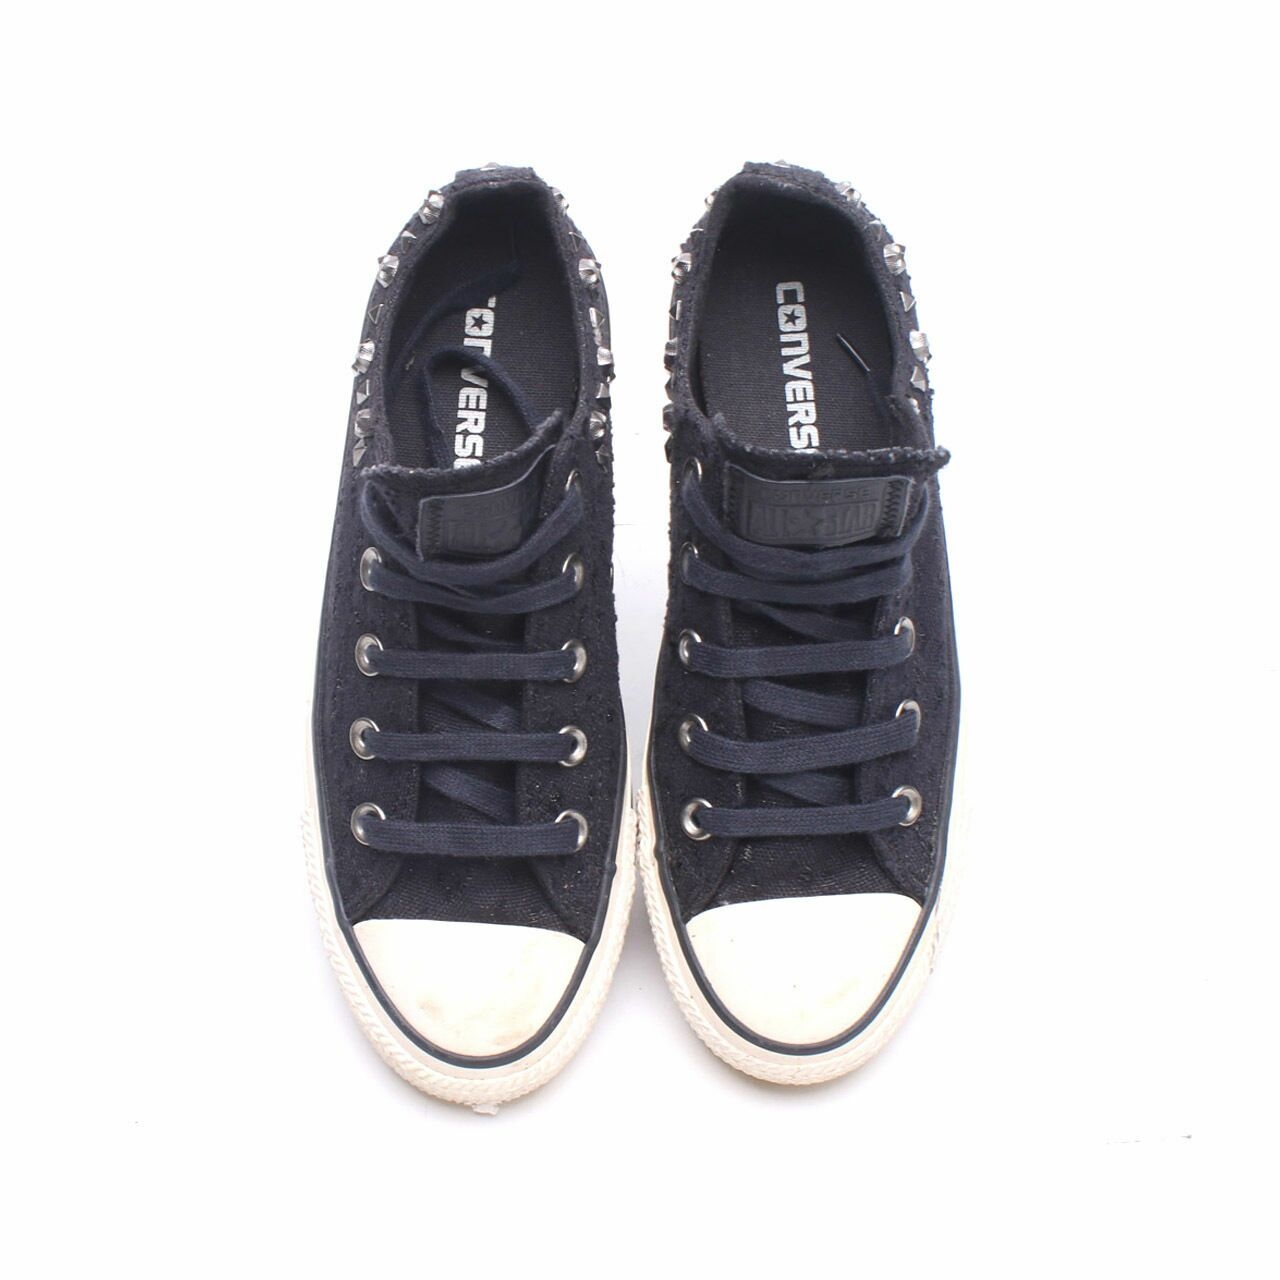 Converse Ct Ox Black/Egret Sneakers